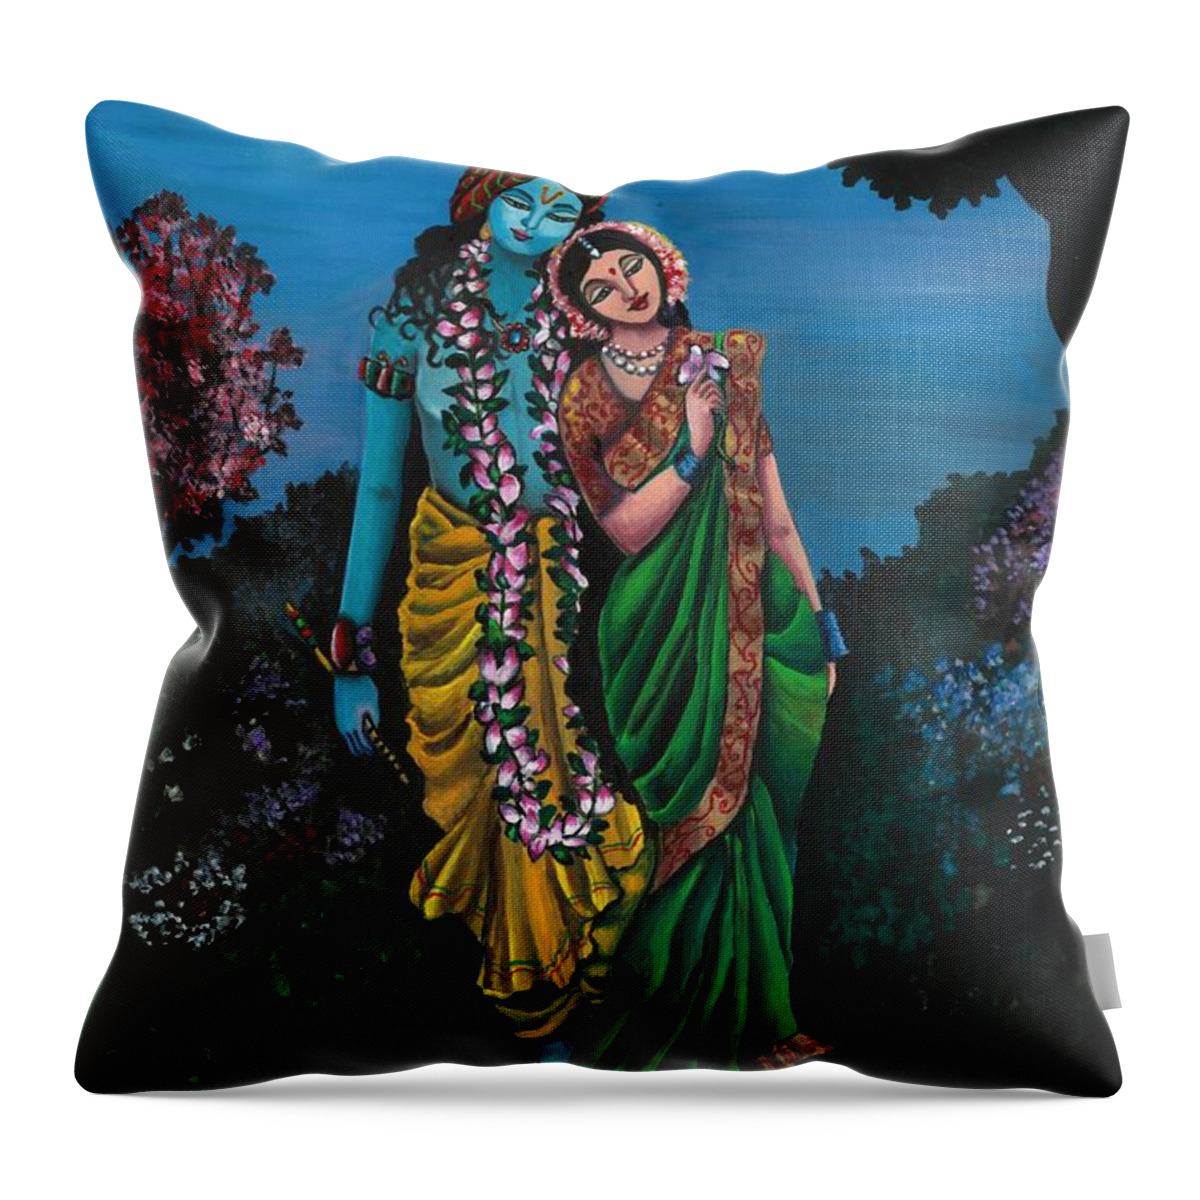 Krishna Throw Pillow featuring the painting Eternal Lovers by Tara Krishna